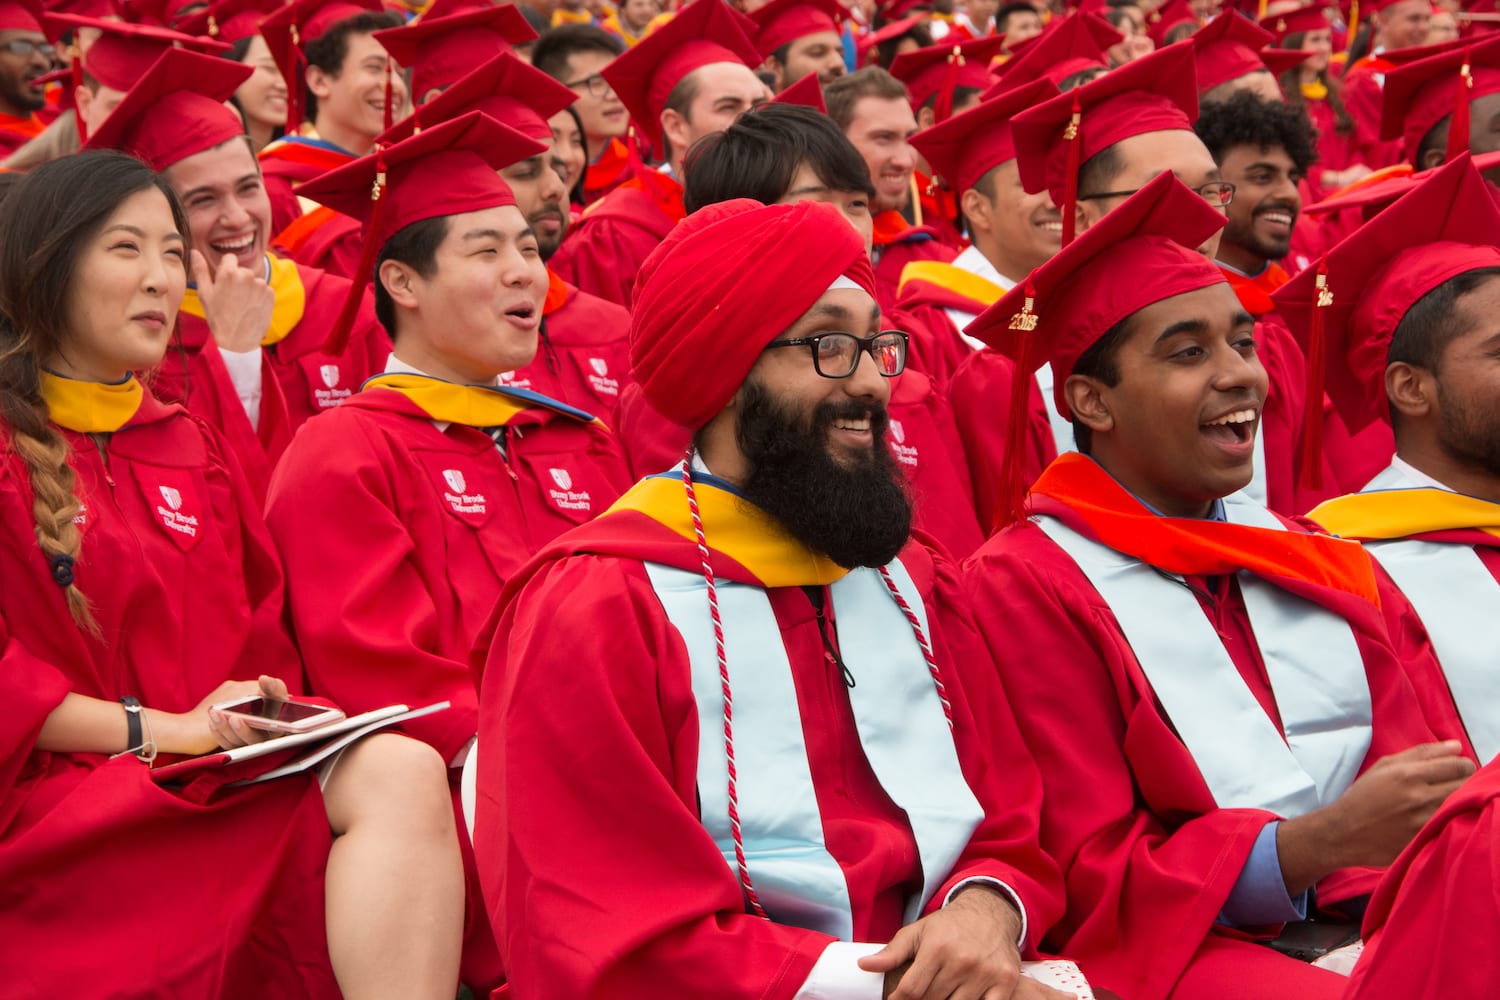 Stony Brook University graduates largest class in its history | TBR